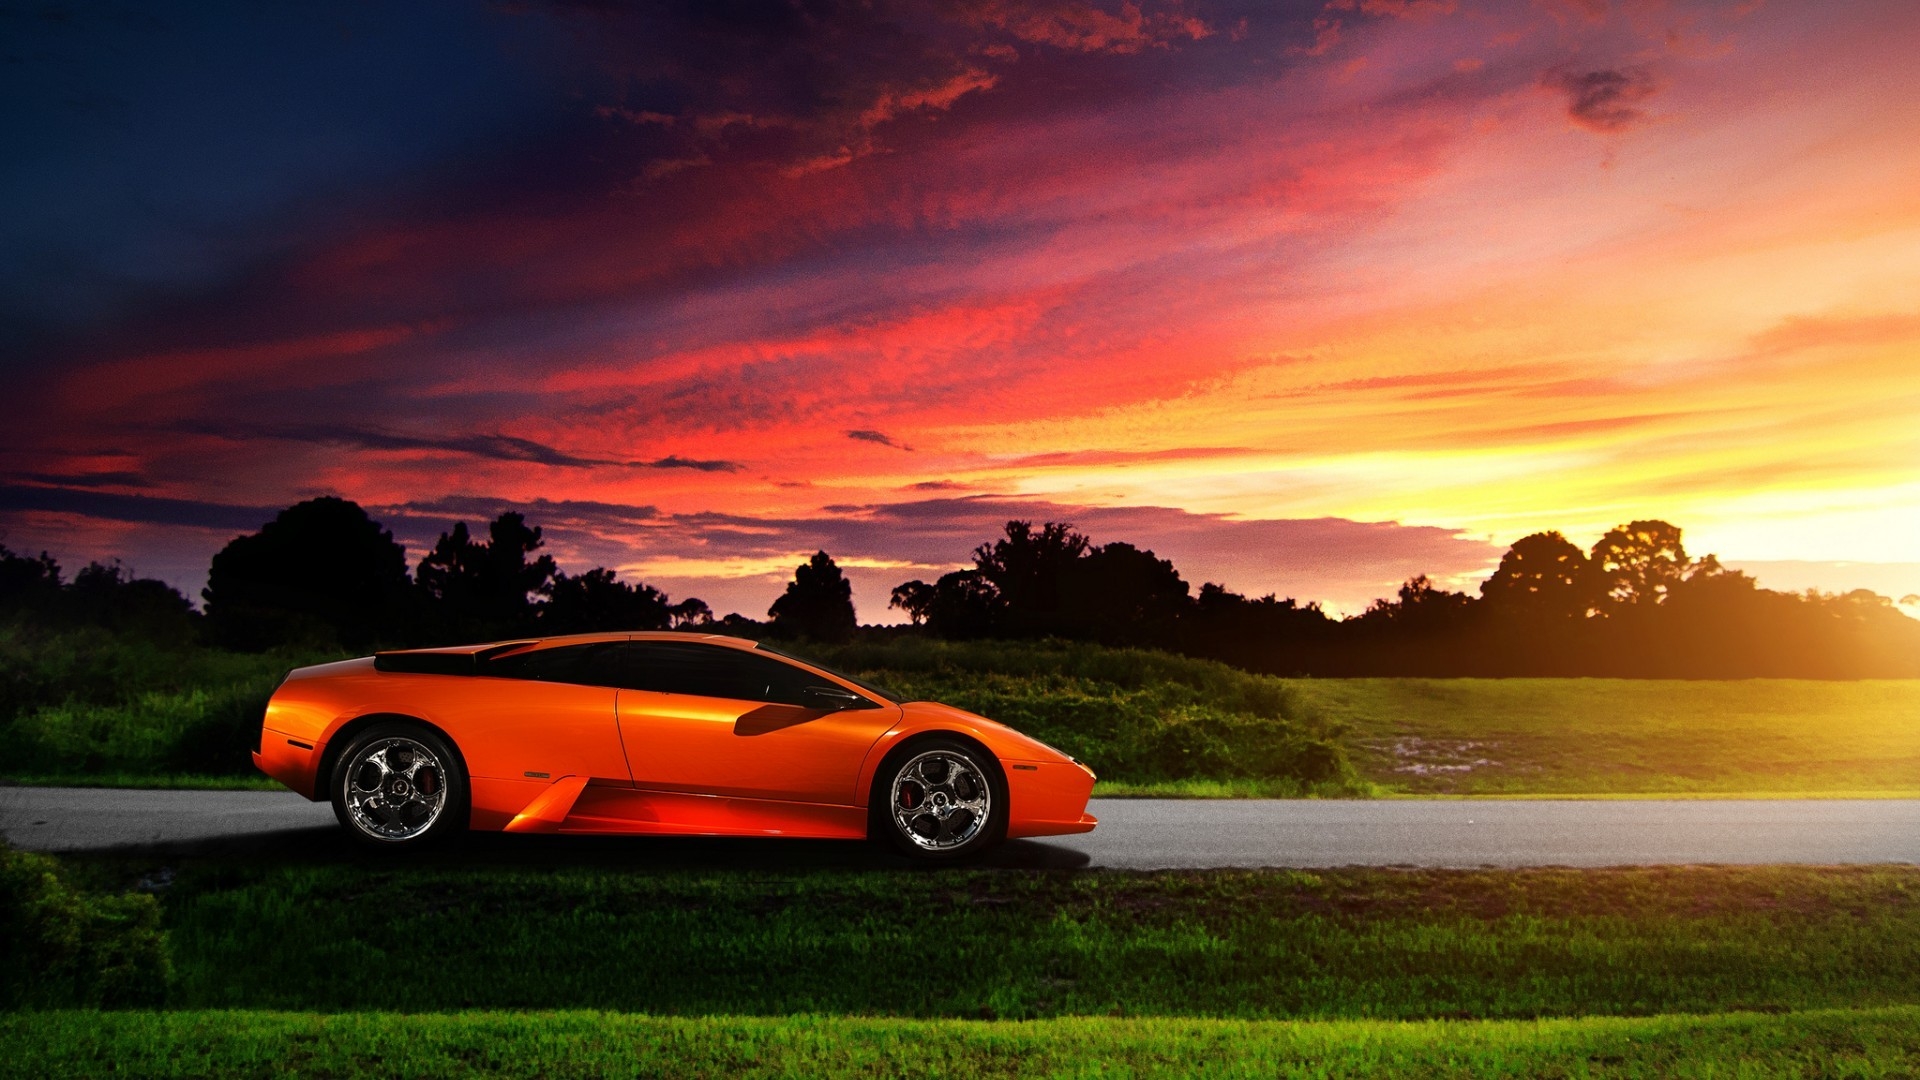 Orange Lamborghini Murcielago in the purple sunset